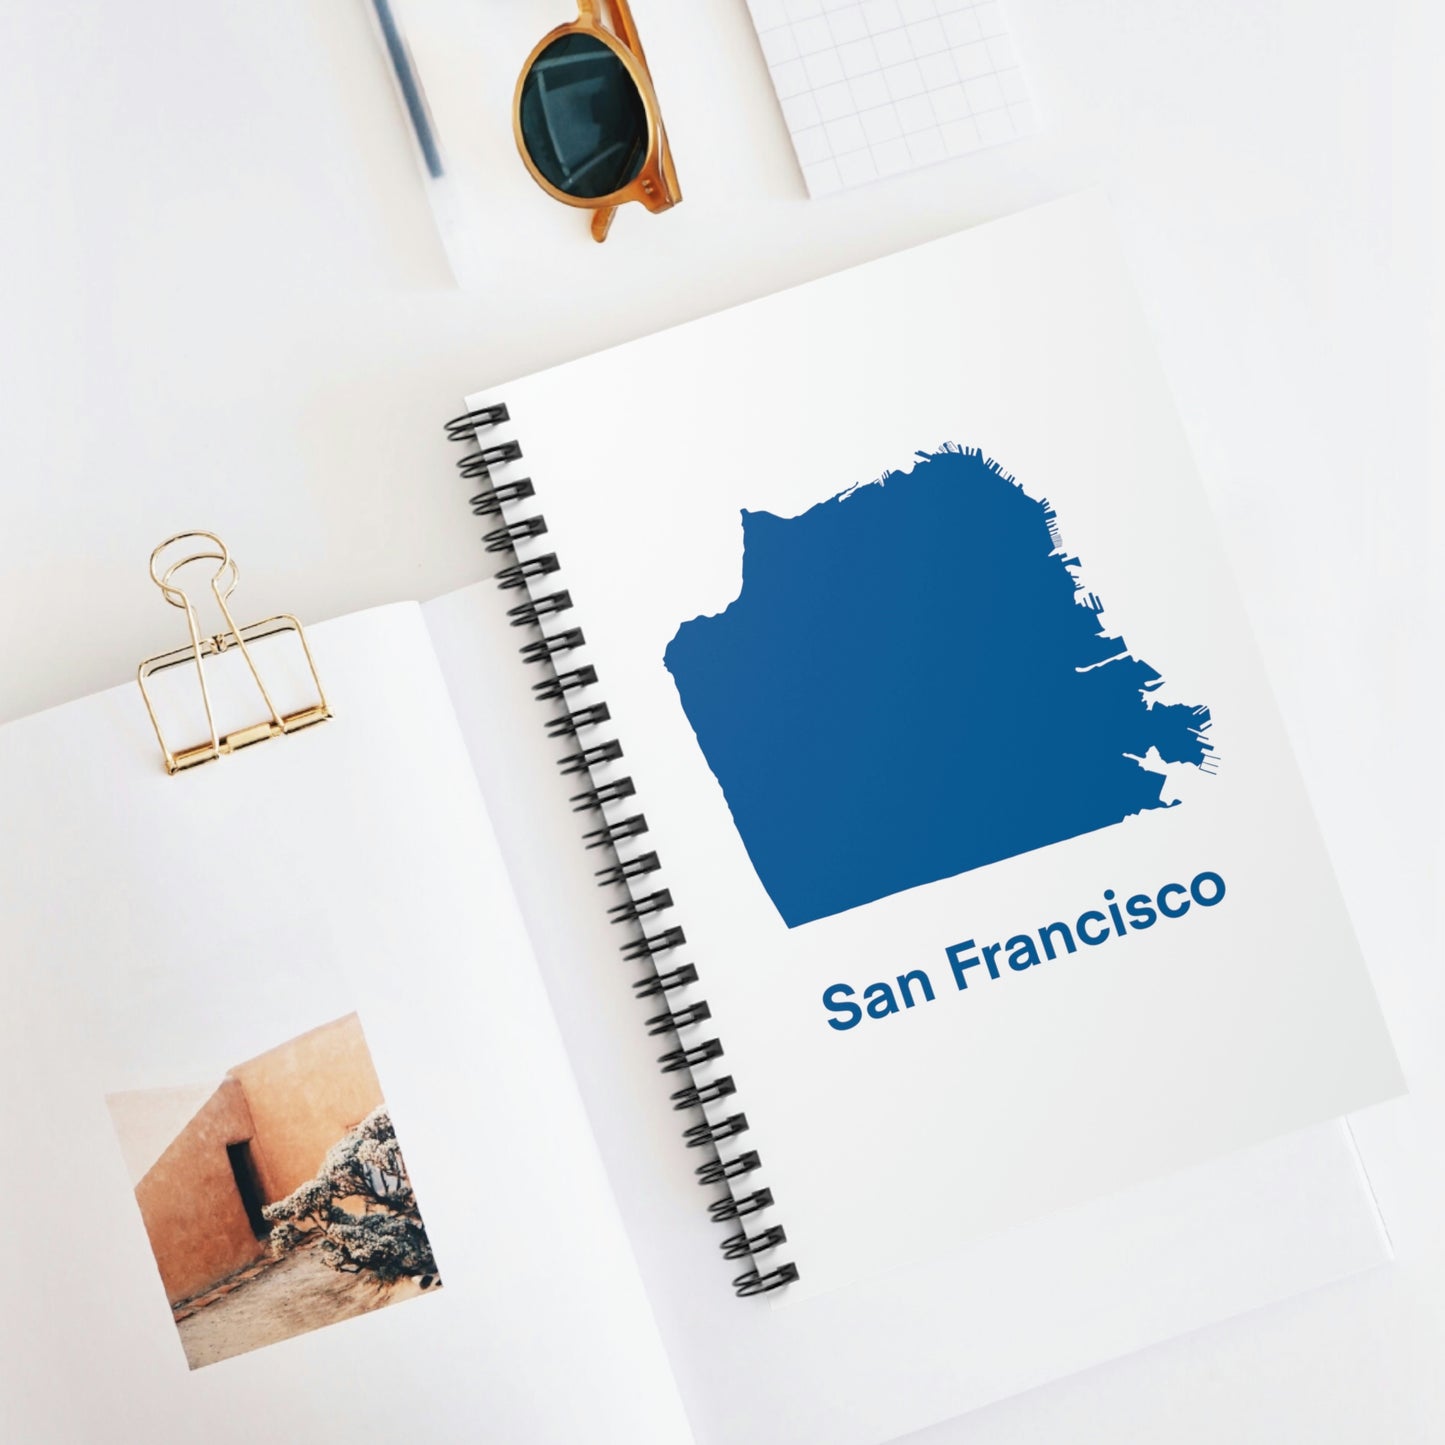 San Francisco Blue Spiral Notebook - Ruled Line